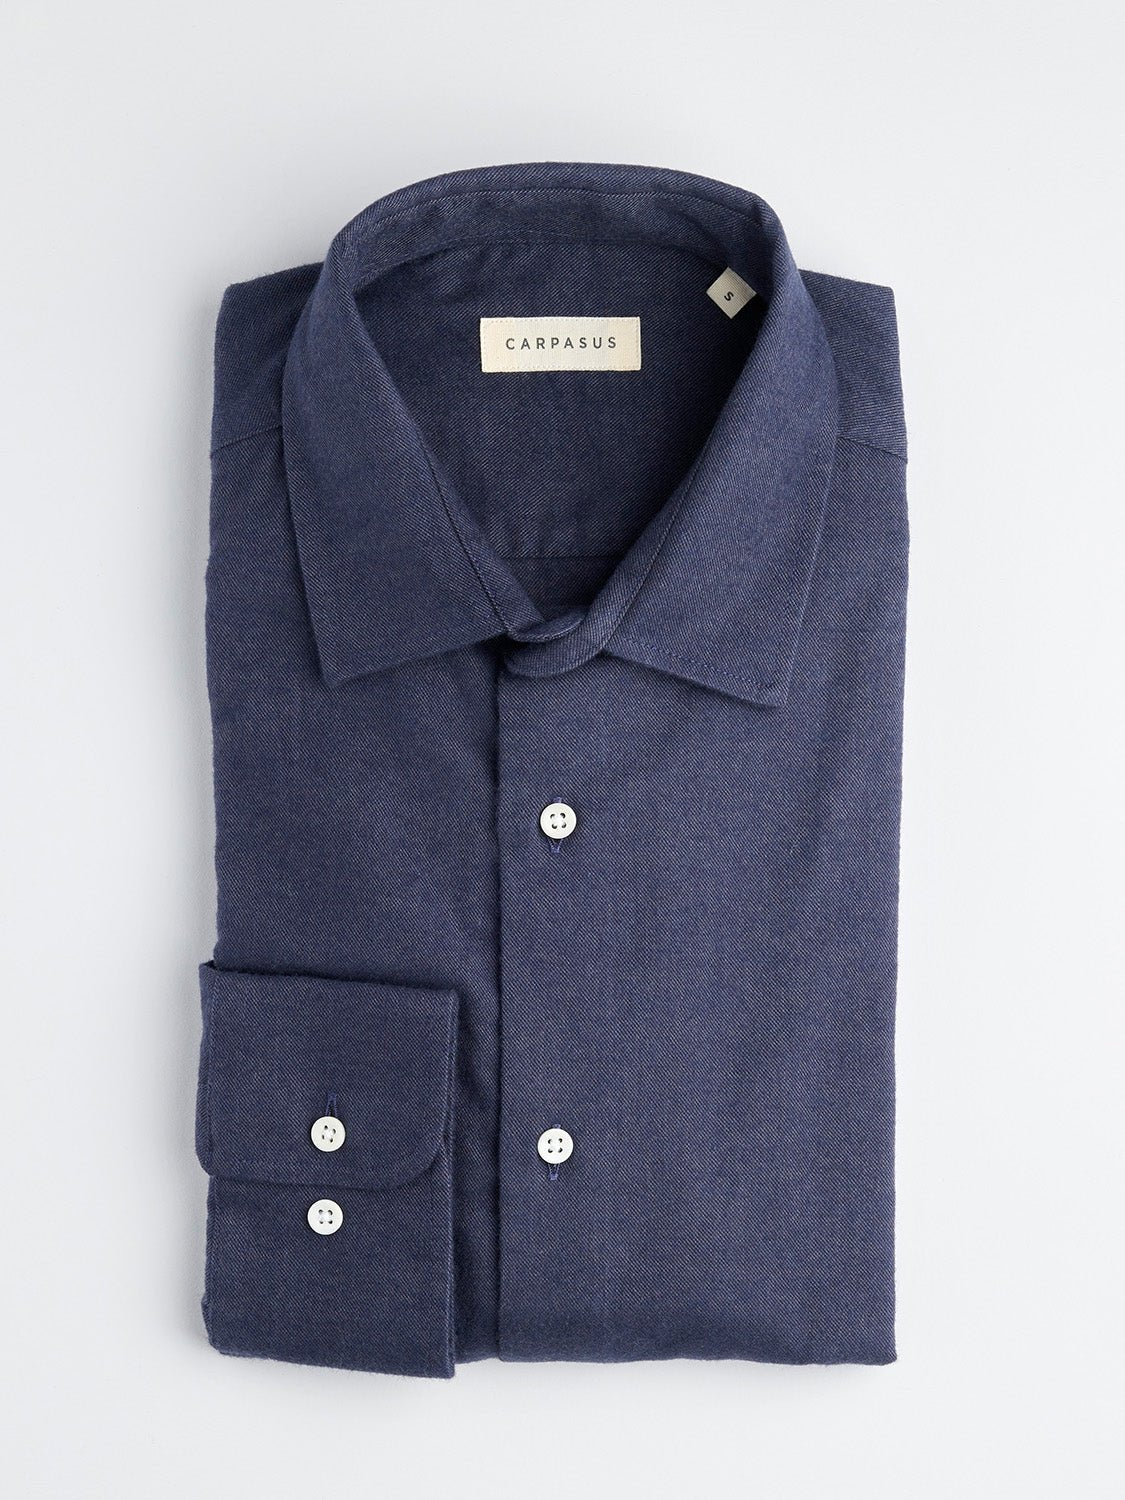 Flannel Shirt from organic cotton Castanio - CARPASUS Online Store